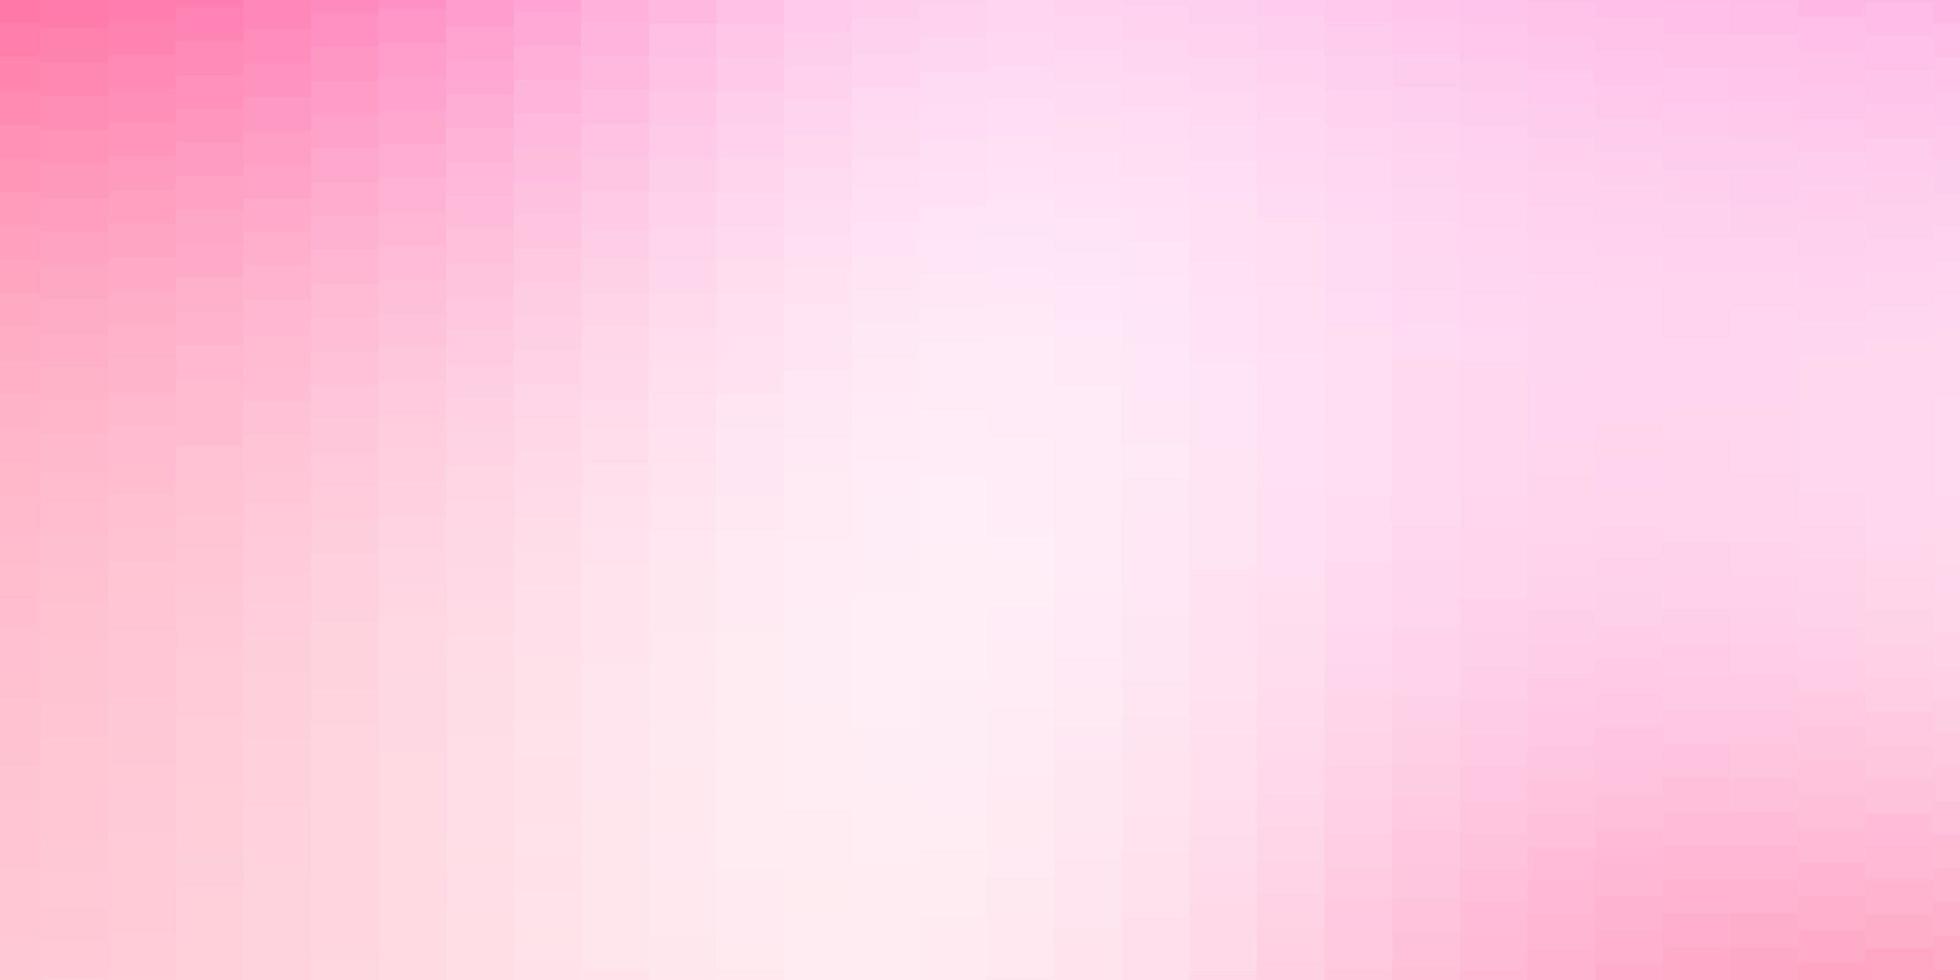 Light Pink, Yellow vector texture in rectangular style.